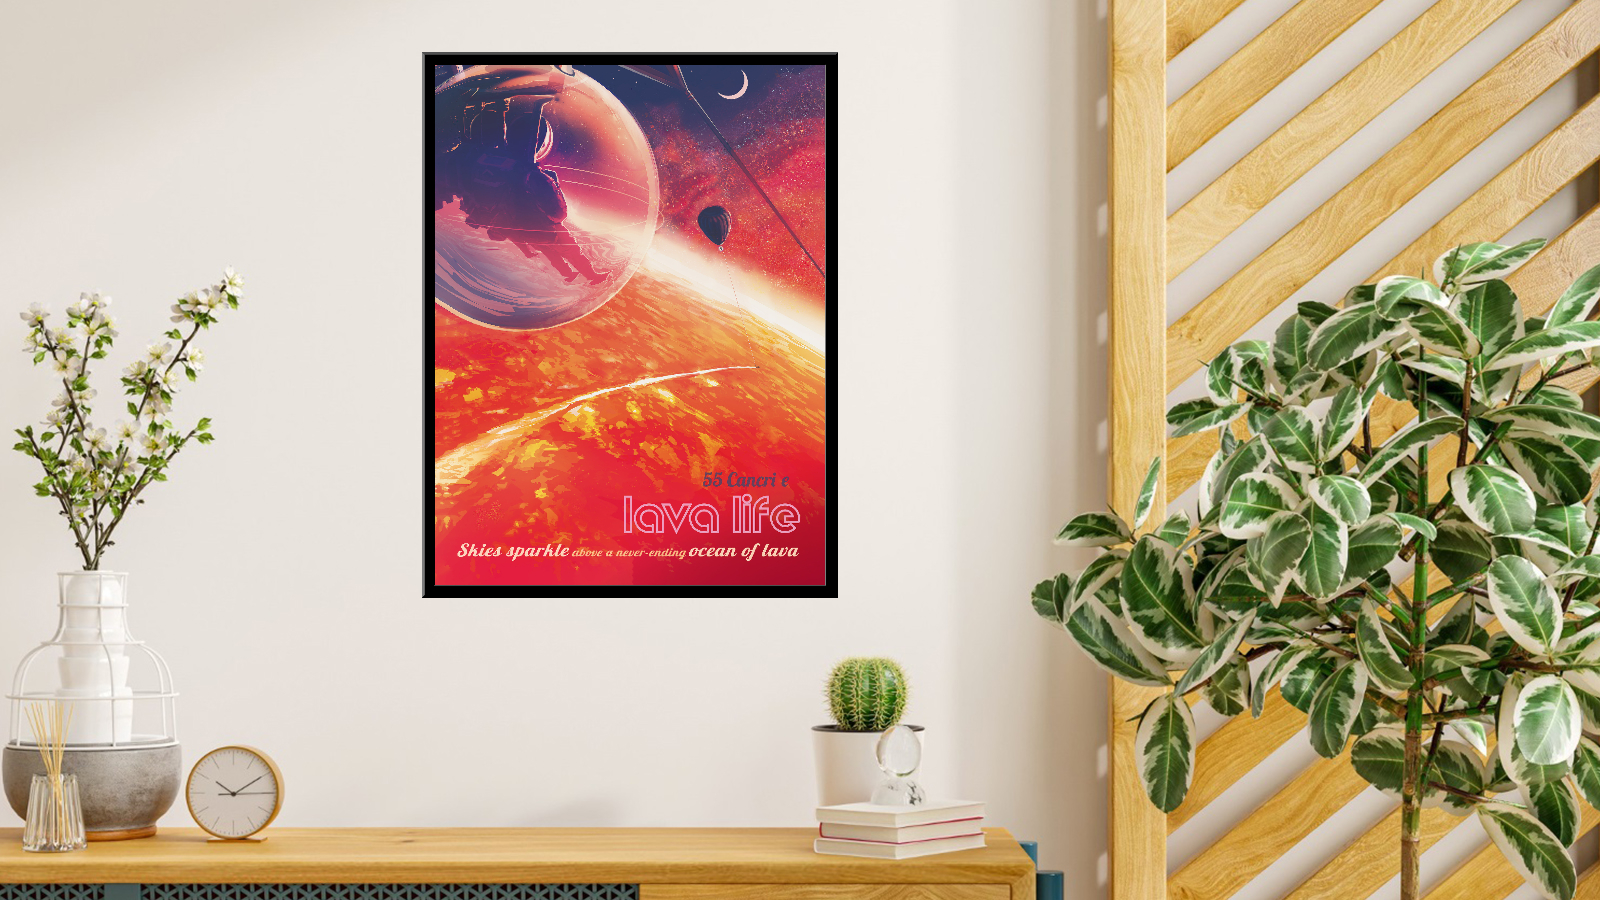 55 Cancri e - lava life